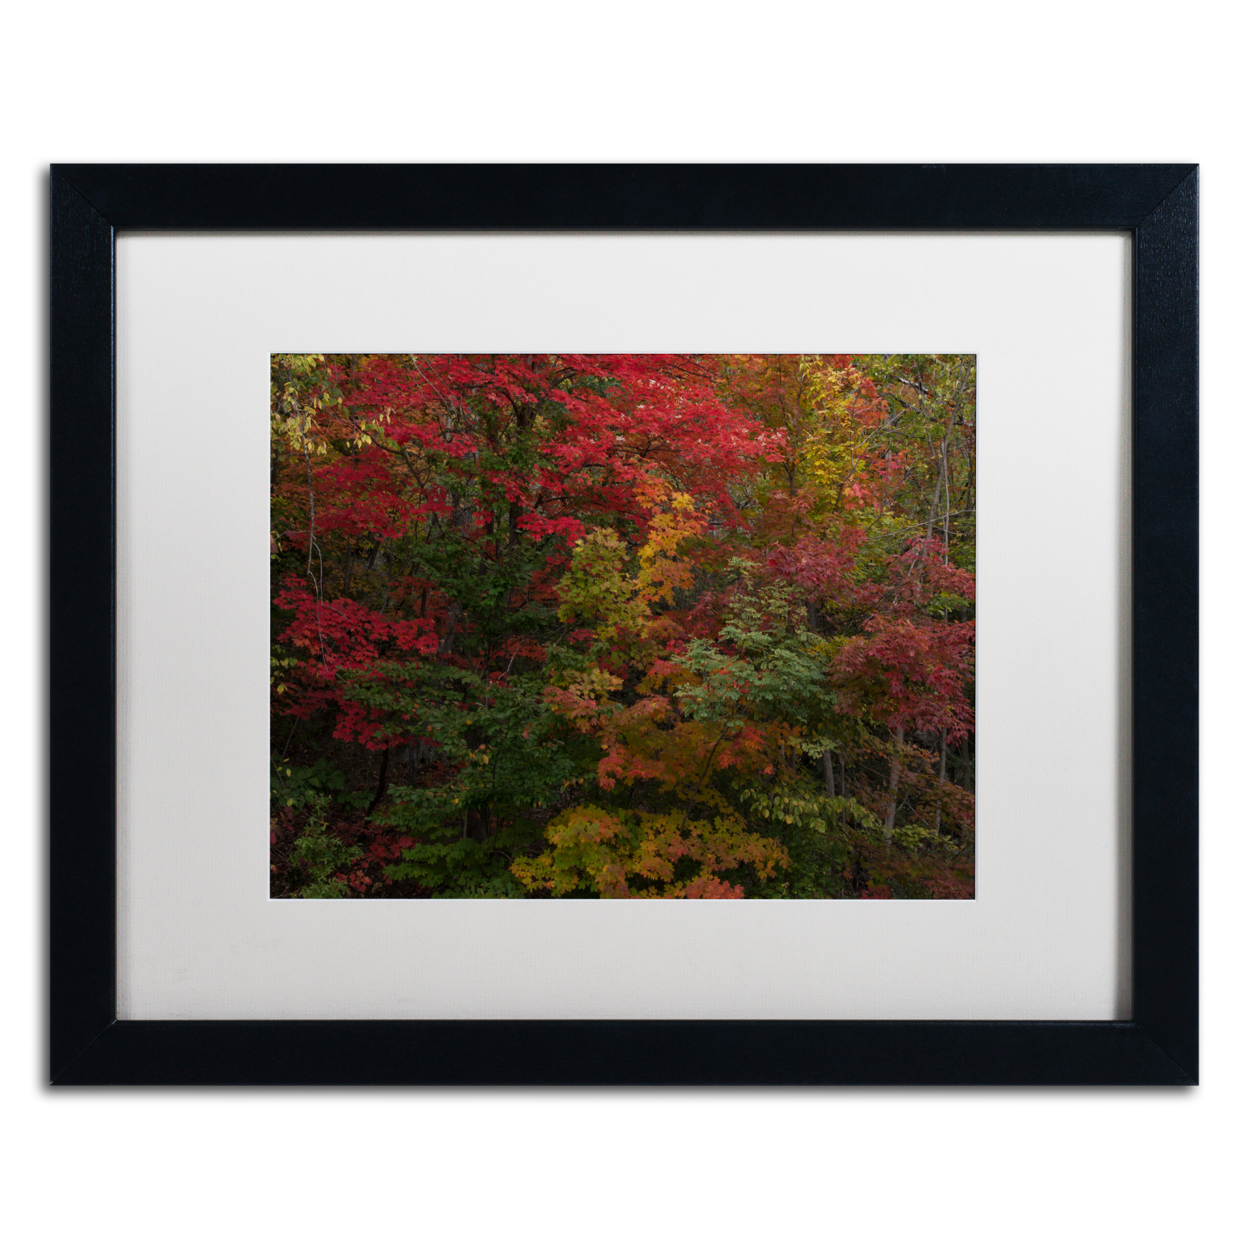 Kurt Shaffer 'Why I Love Autumn' Black Wooden Framed Art 18 X 22 Inches